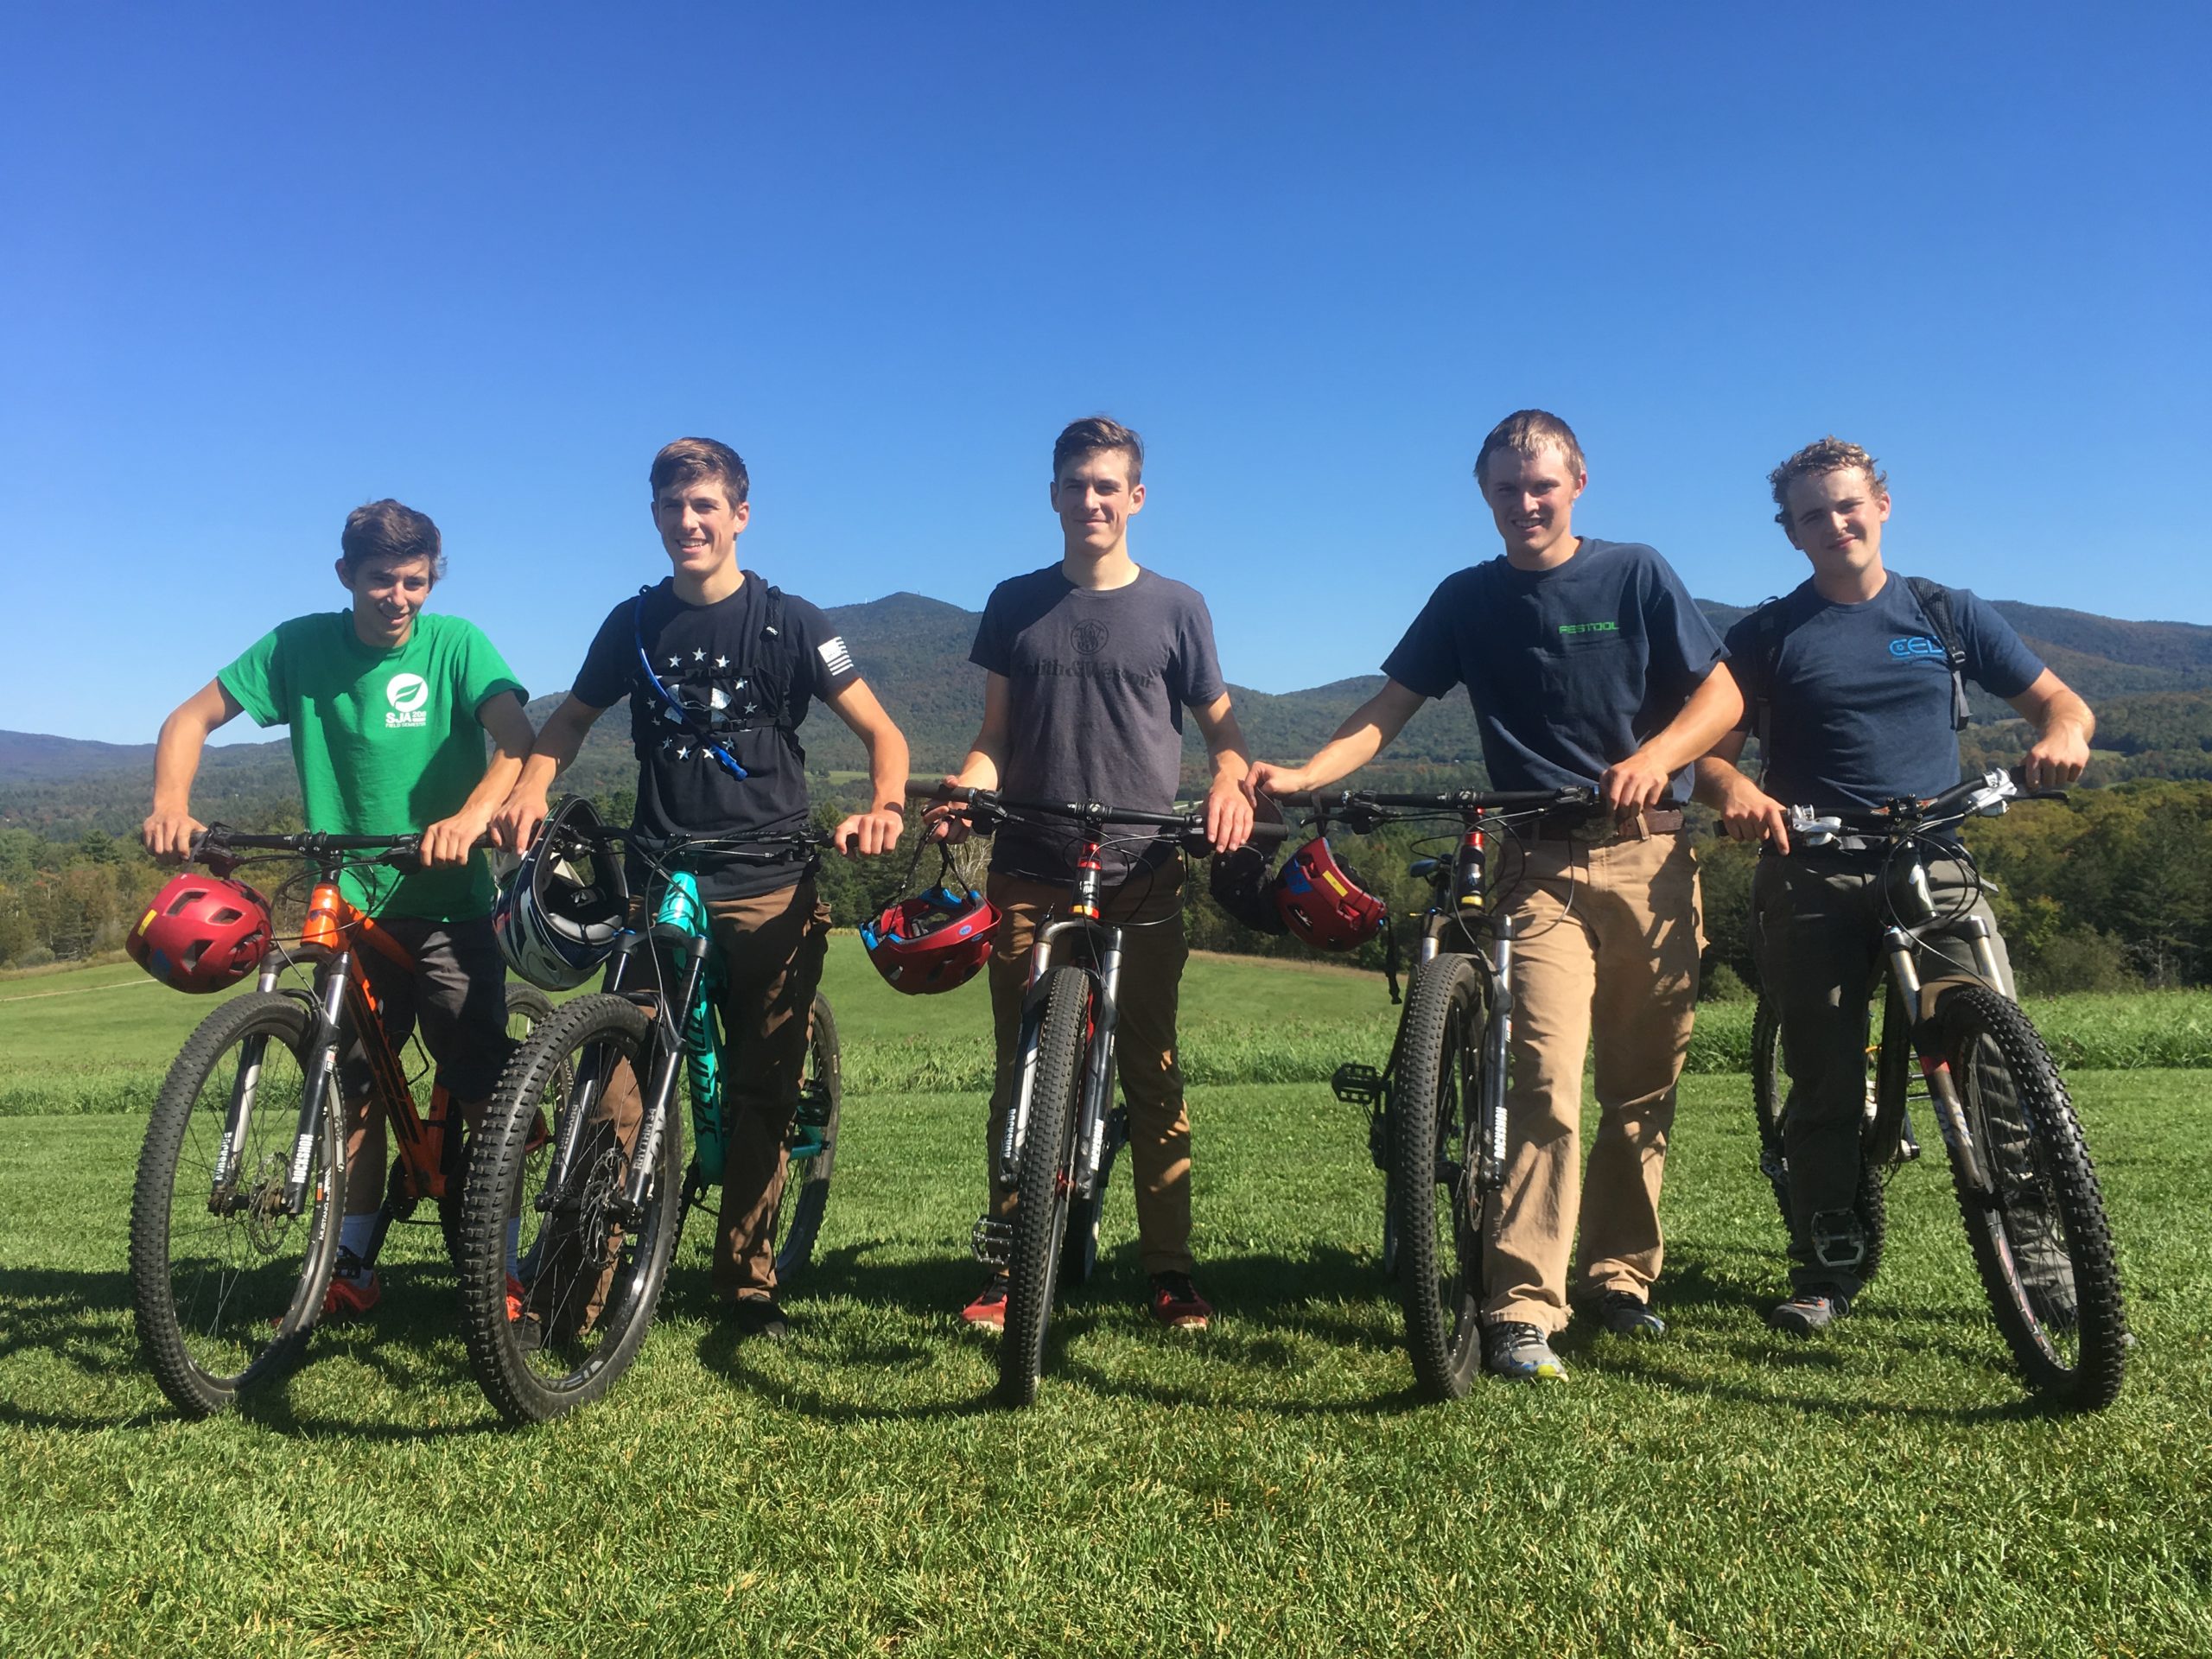 Students on mountain bikes